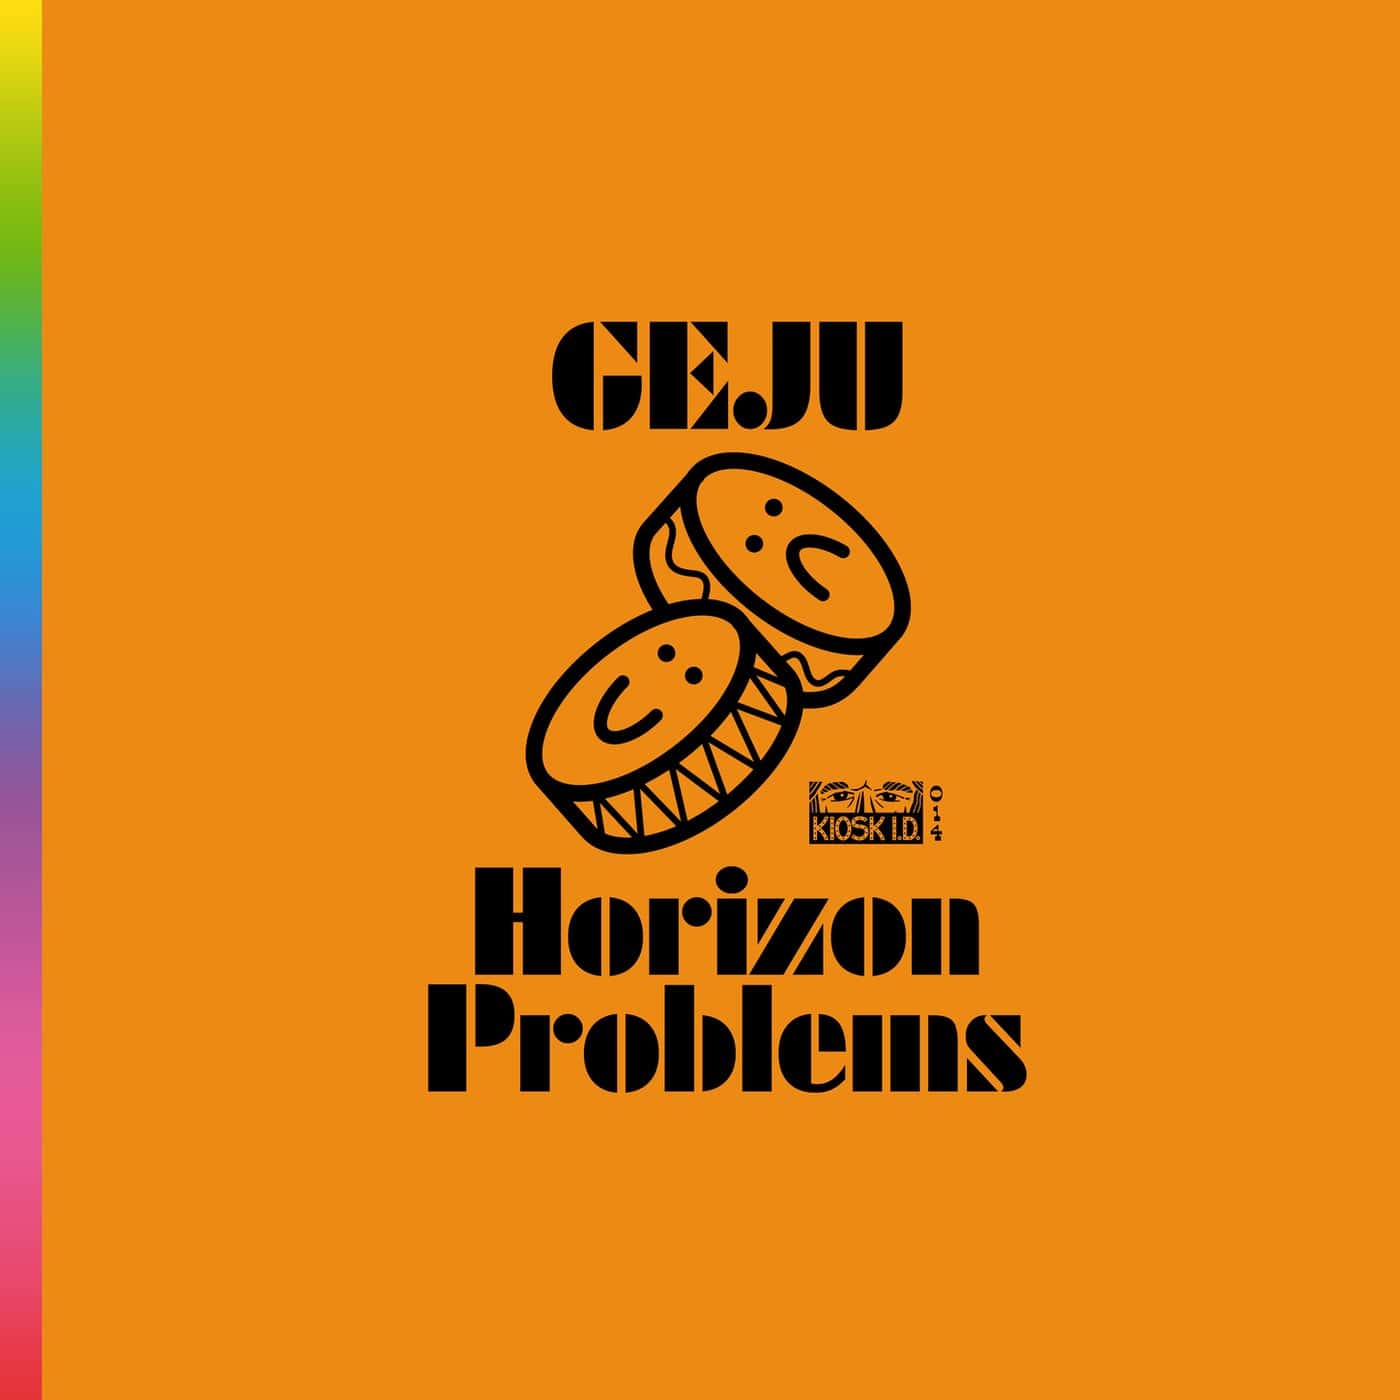 Download Geju - Horizon Problems on Electrobuzz